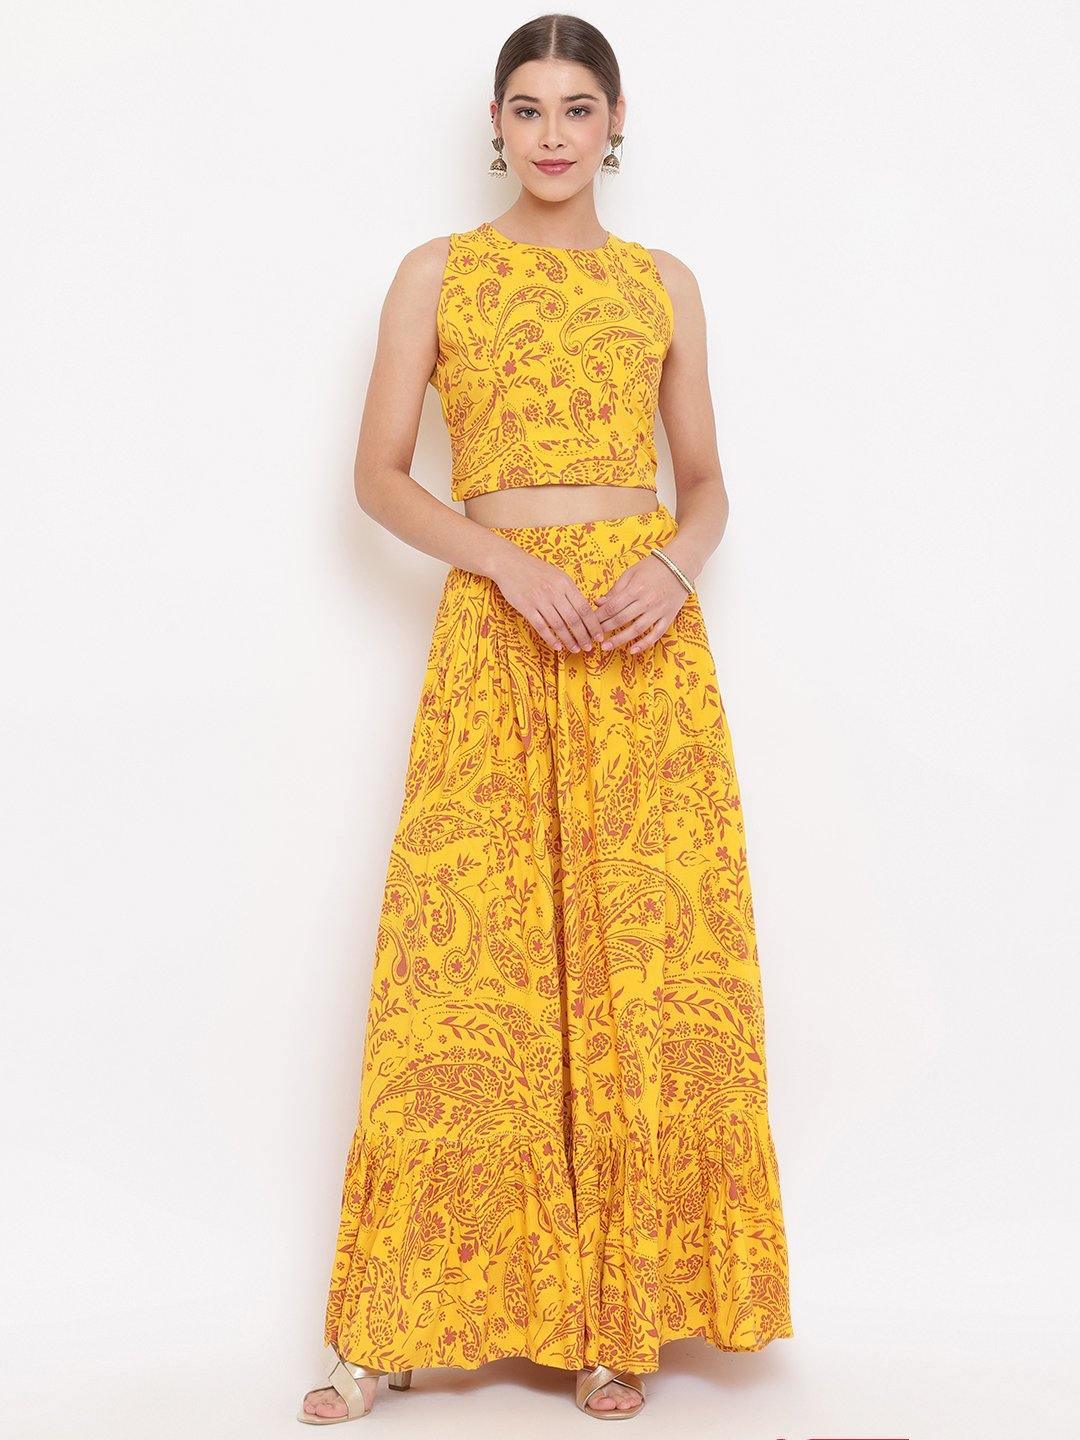 Mustard Rayon Crop Top With Skirt Janasya Gold-Discontinue